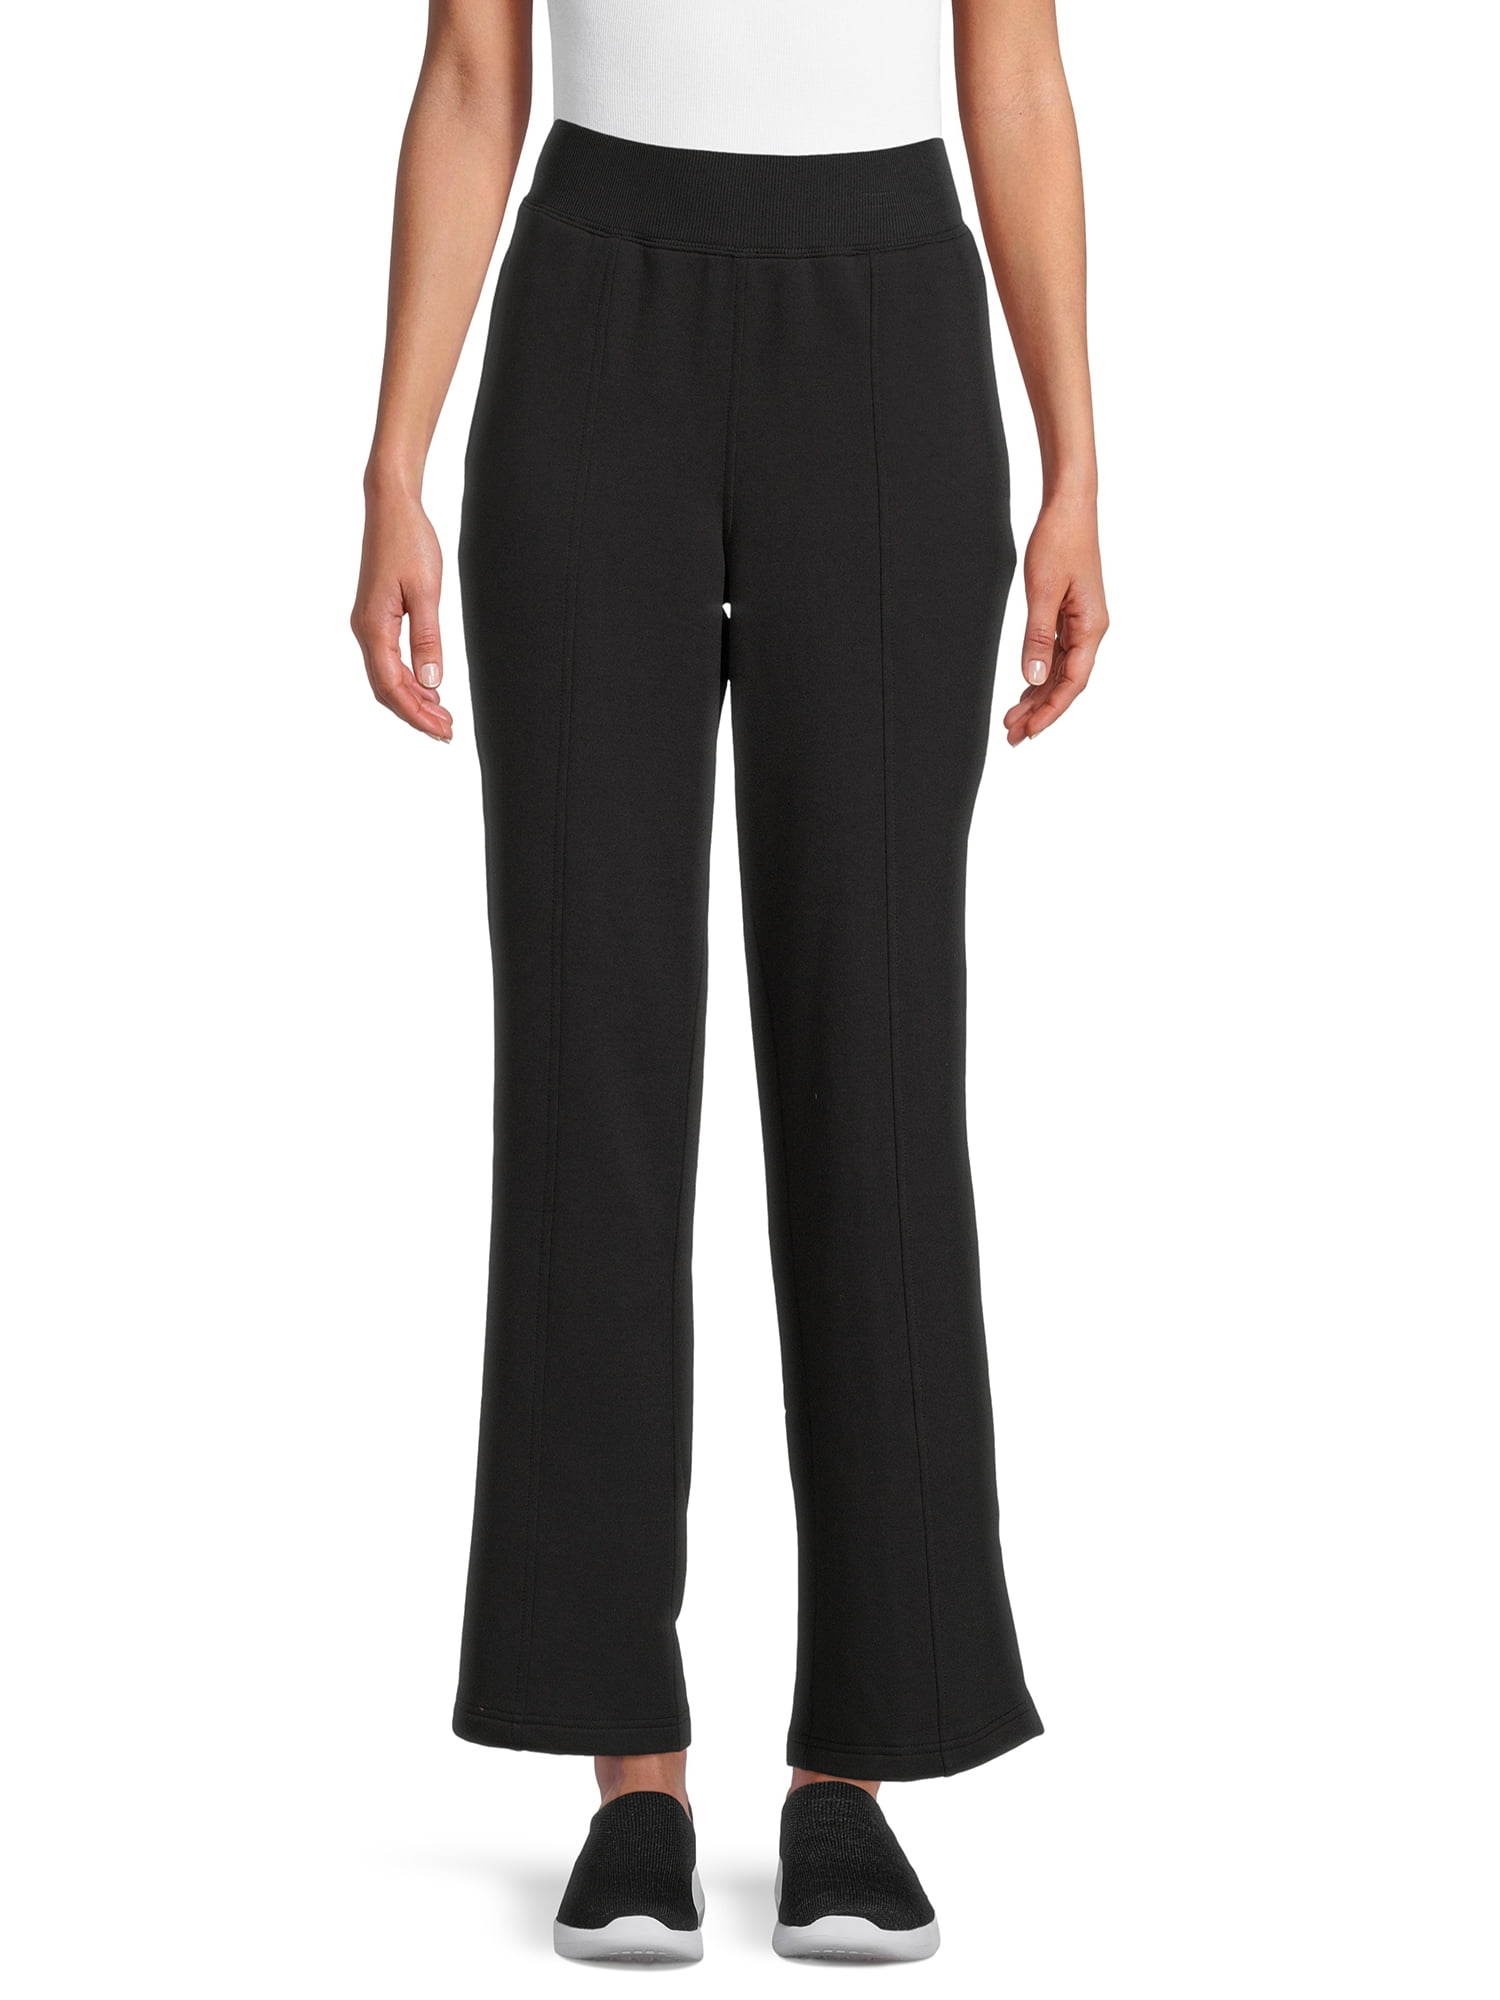 Avia, Pants & Jumpsuits, Avia Flex Tech Black 2 Front Pockets Jogger  Pants Women Size Xl Nwt